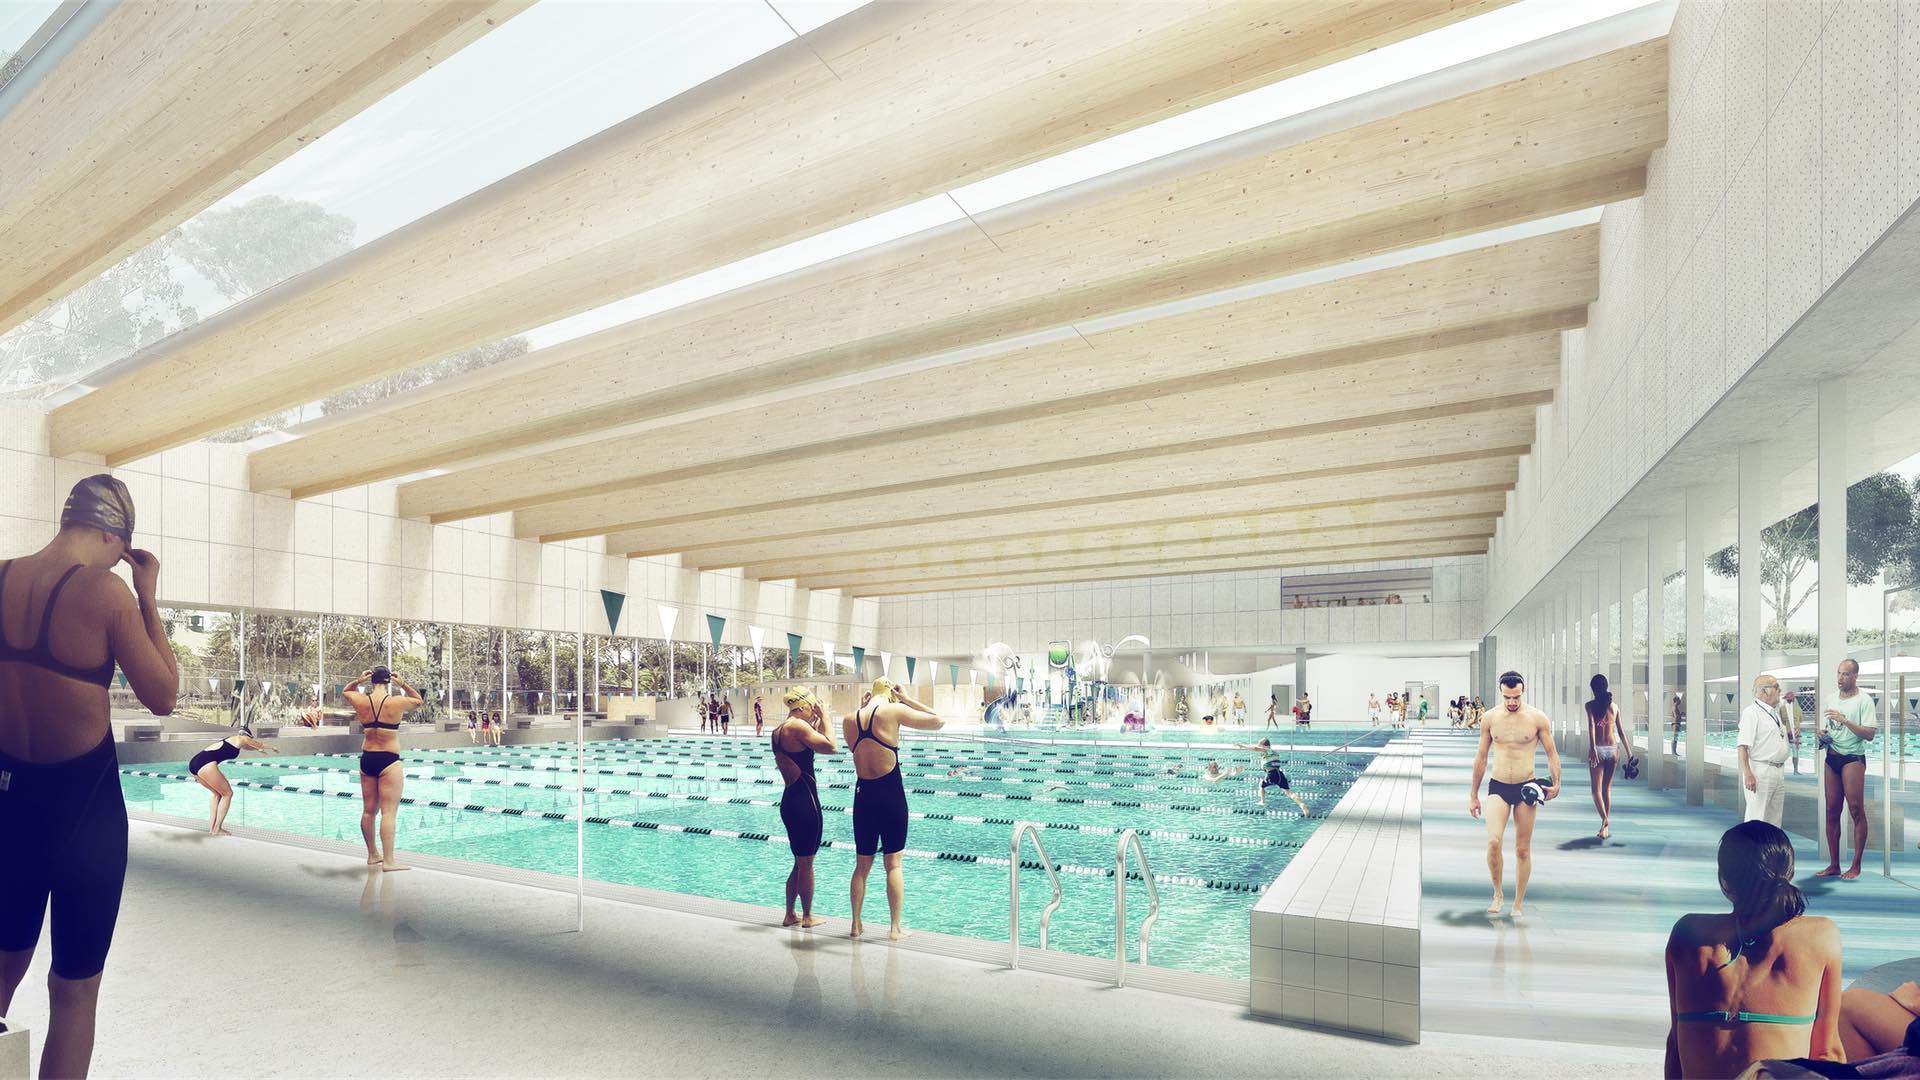 Work on Sydney's Huge New Gunyama Park Aquatic Centre Kicks Off Next Month